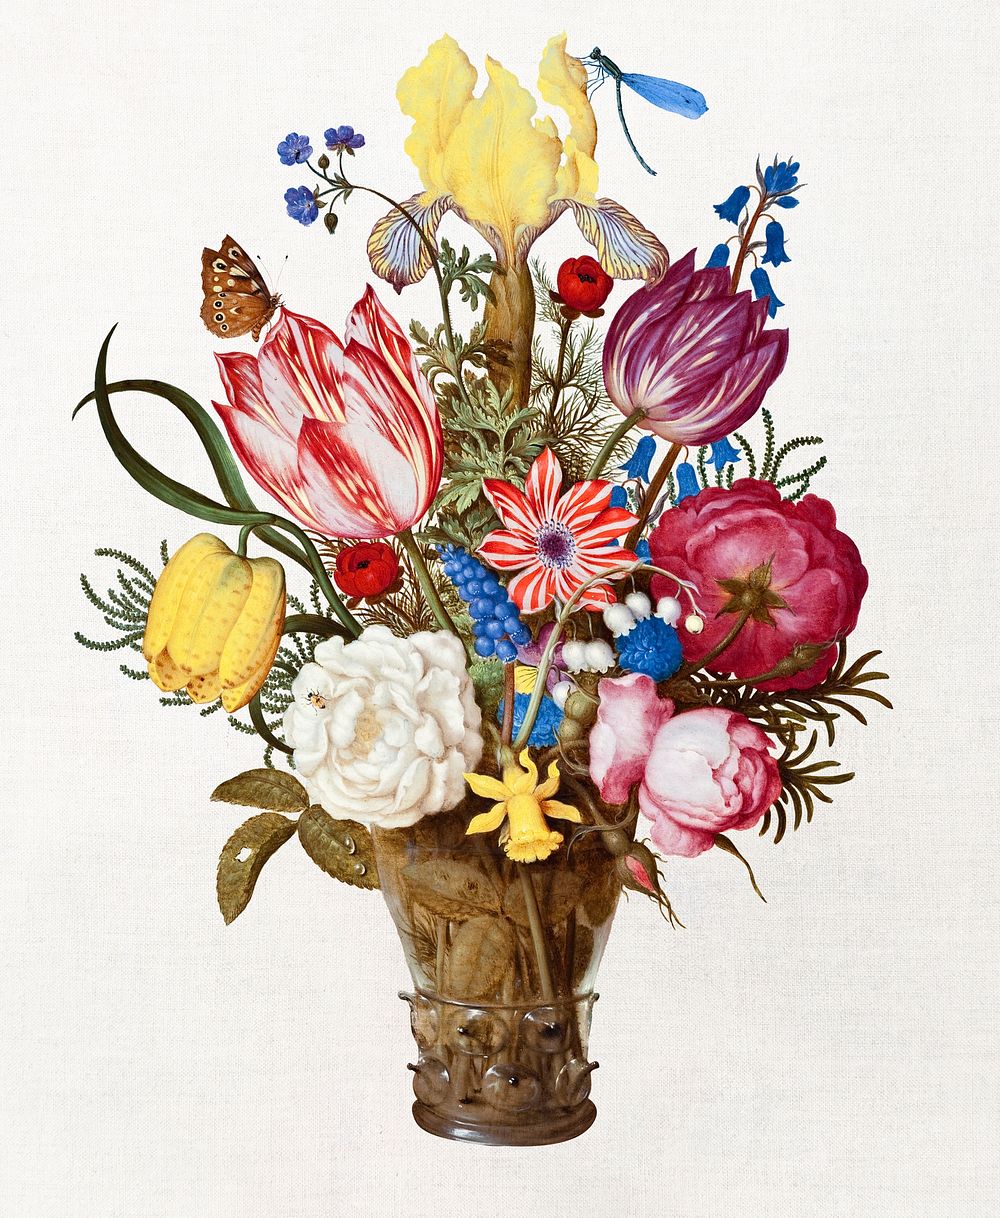 Flower bouquet clipart, still life floral illustration psd, Ambrosius Bosschaert's artwork remastered by rawpixel